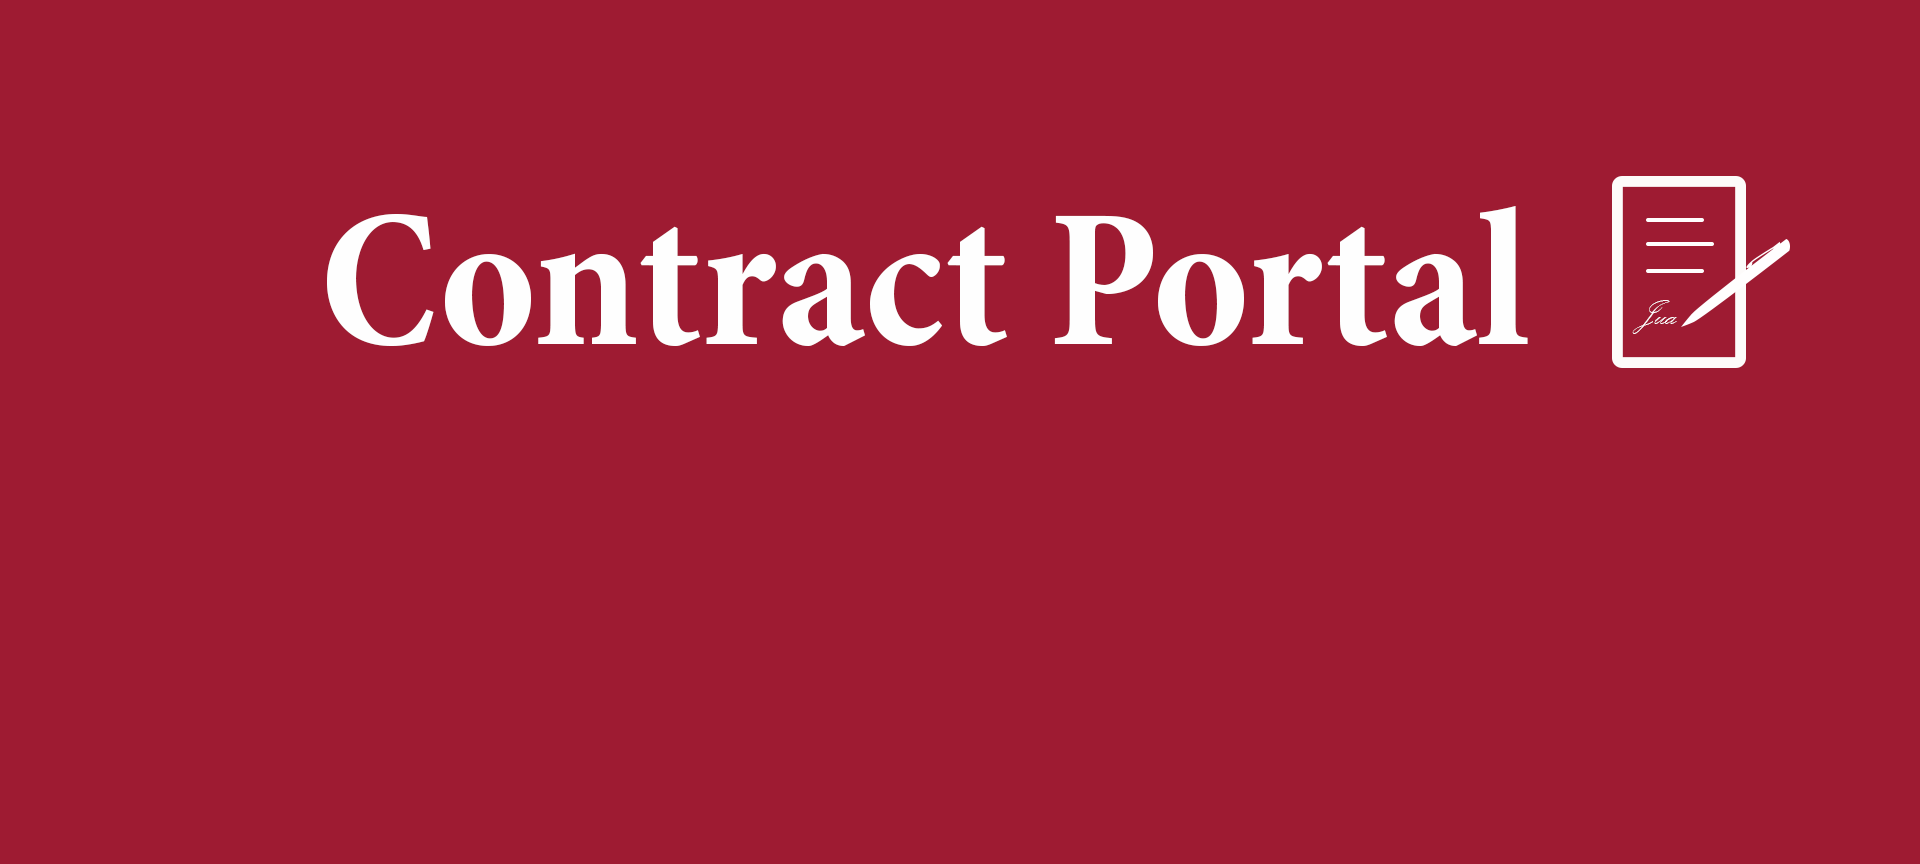 Contract Portal